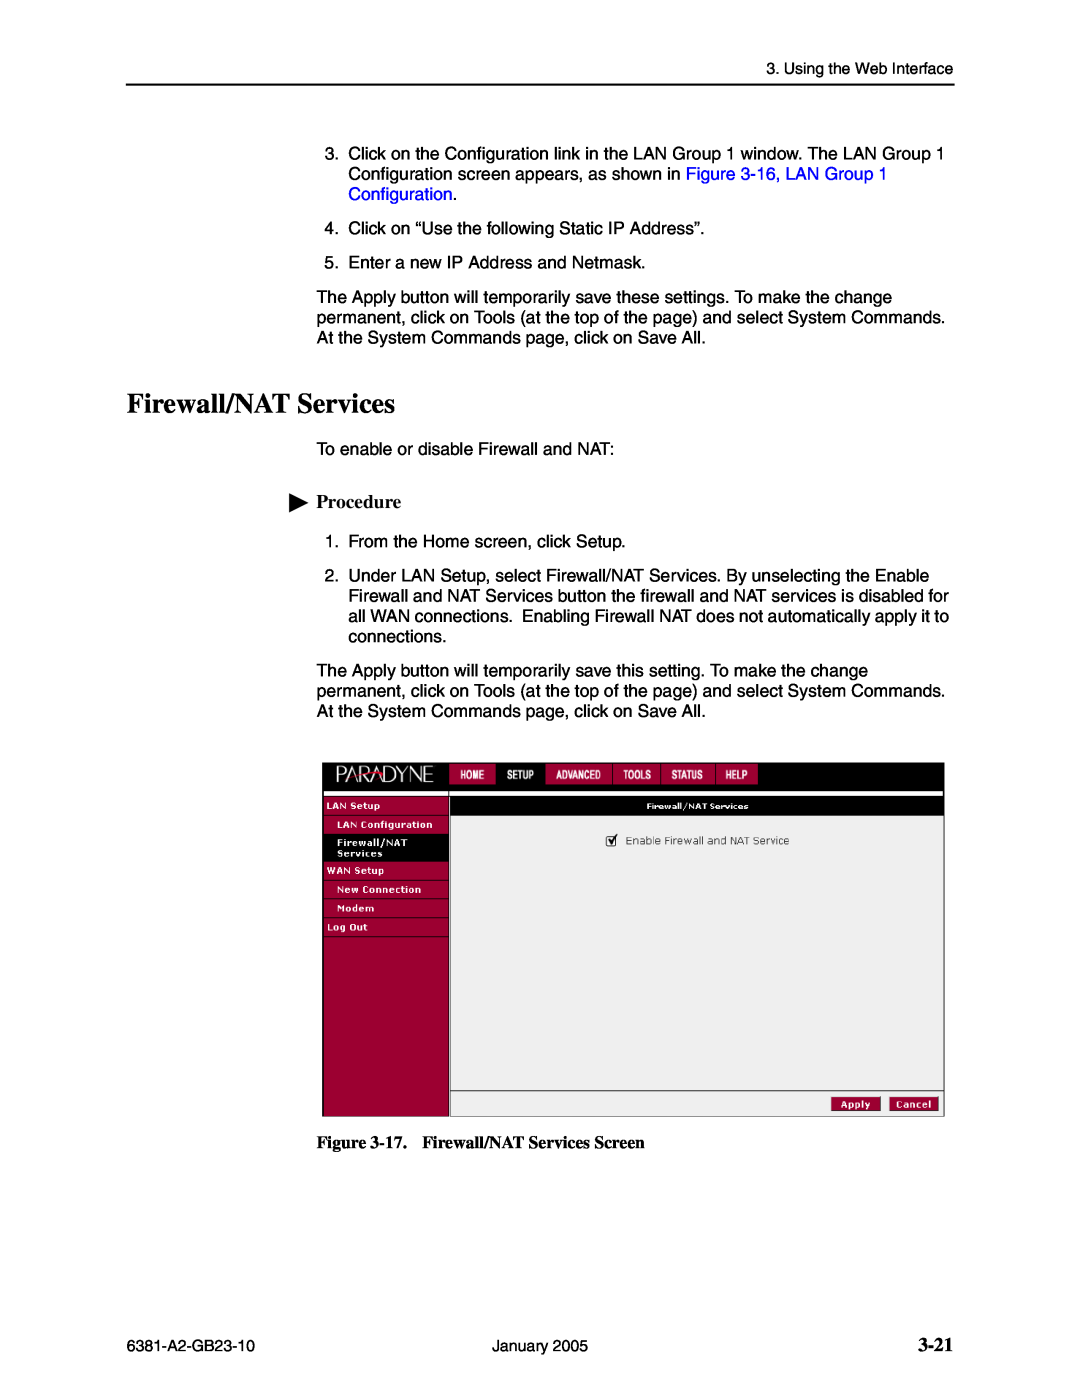 Paradyne 6381-A3 manual 3-21, 17. Firewall/NAT Services Screen, Procedure 